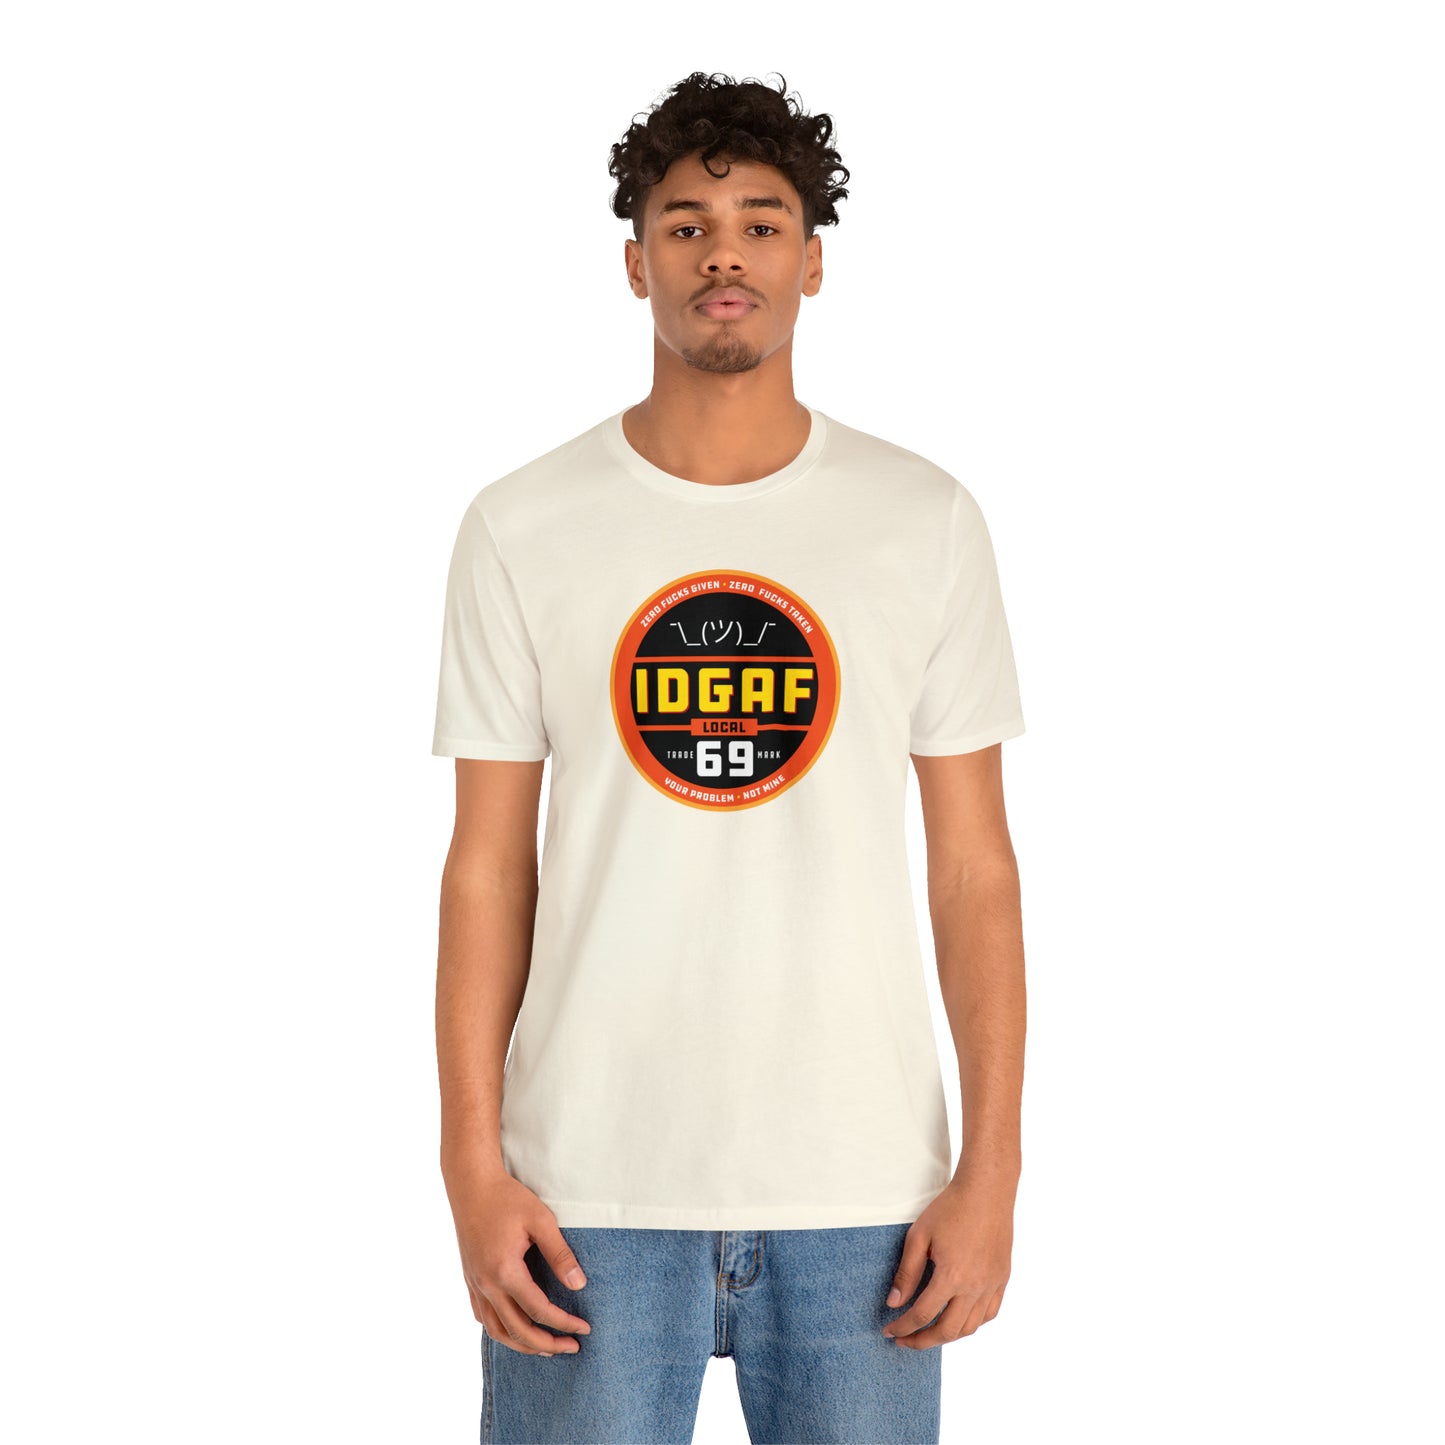 IDGAF Local 69 Unisex T-Shirt